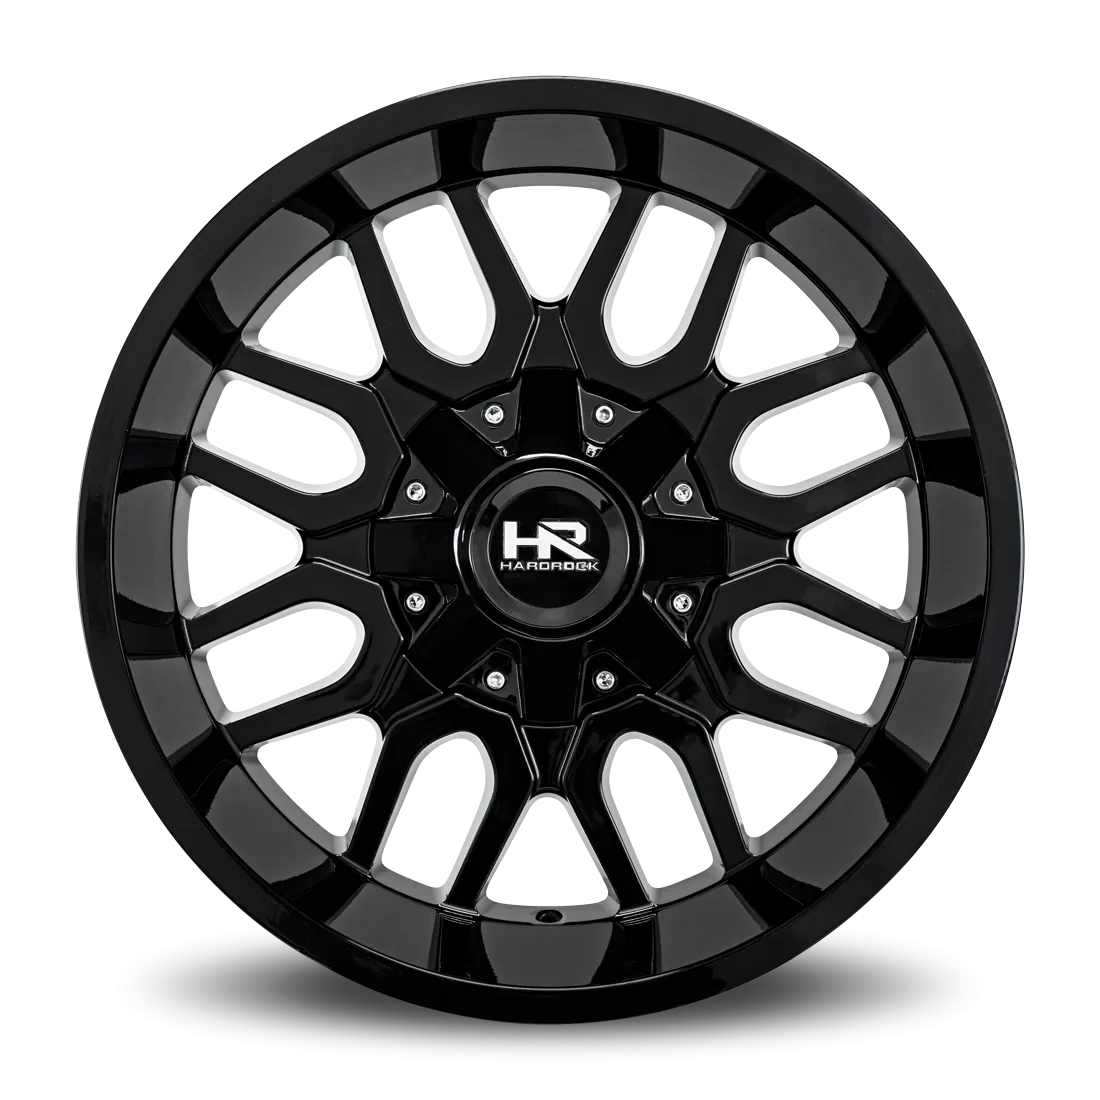 Hardrock Offroad Commander Aluminum Wheel 20x12 5x150/139.7 -51 110.3 Gloss Black - H709-201297151GB